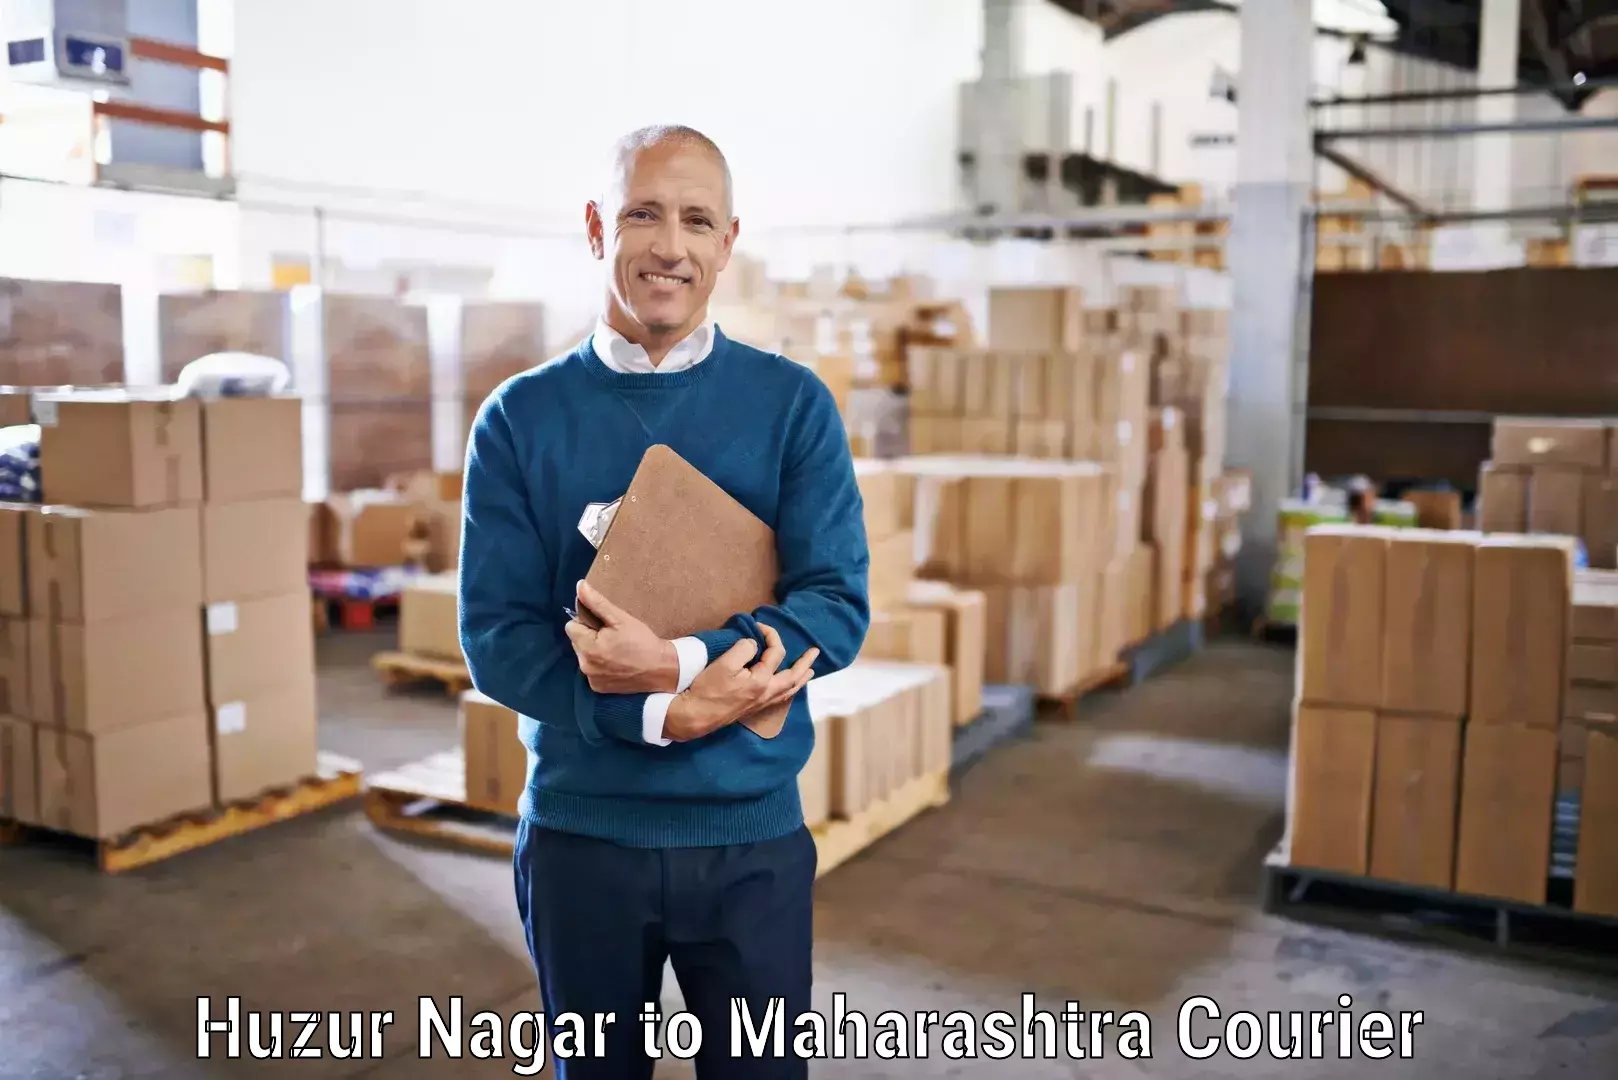 Courier service partnerships Huzur Nagar to Gangapur Aurangabad